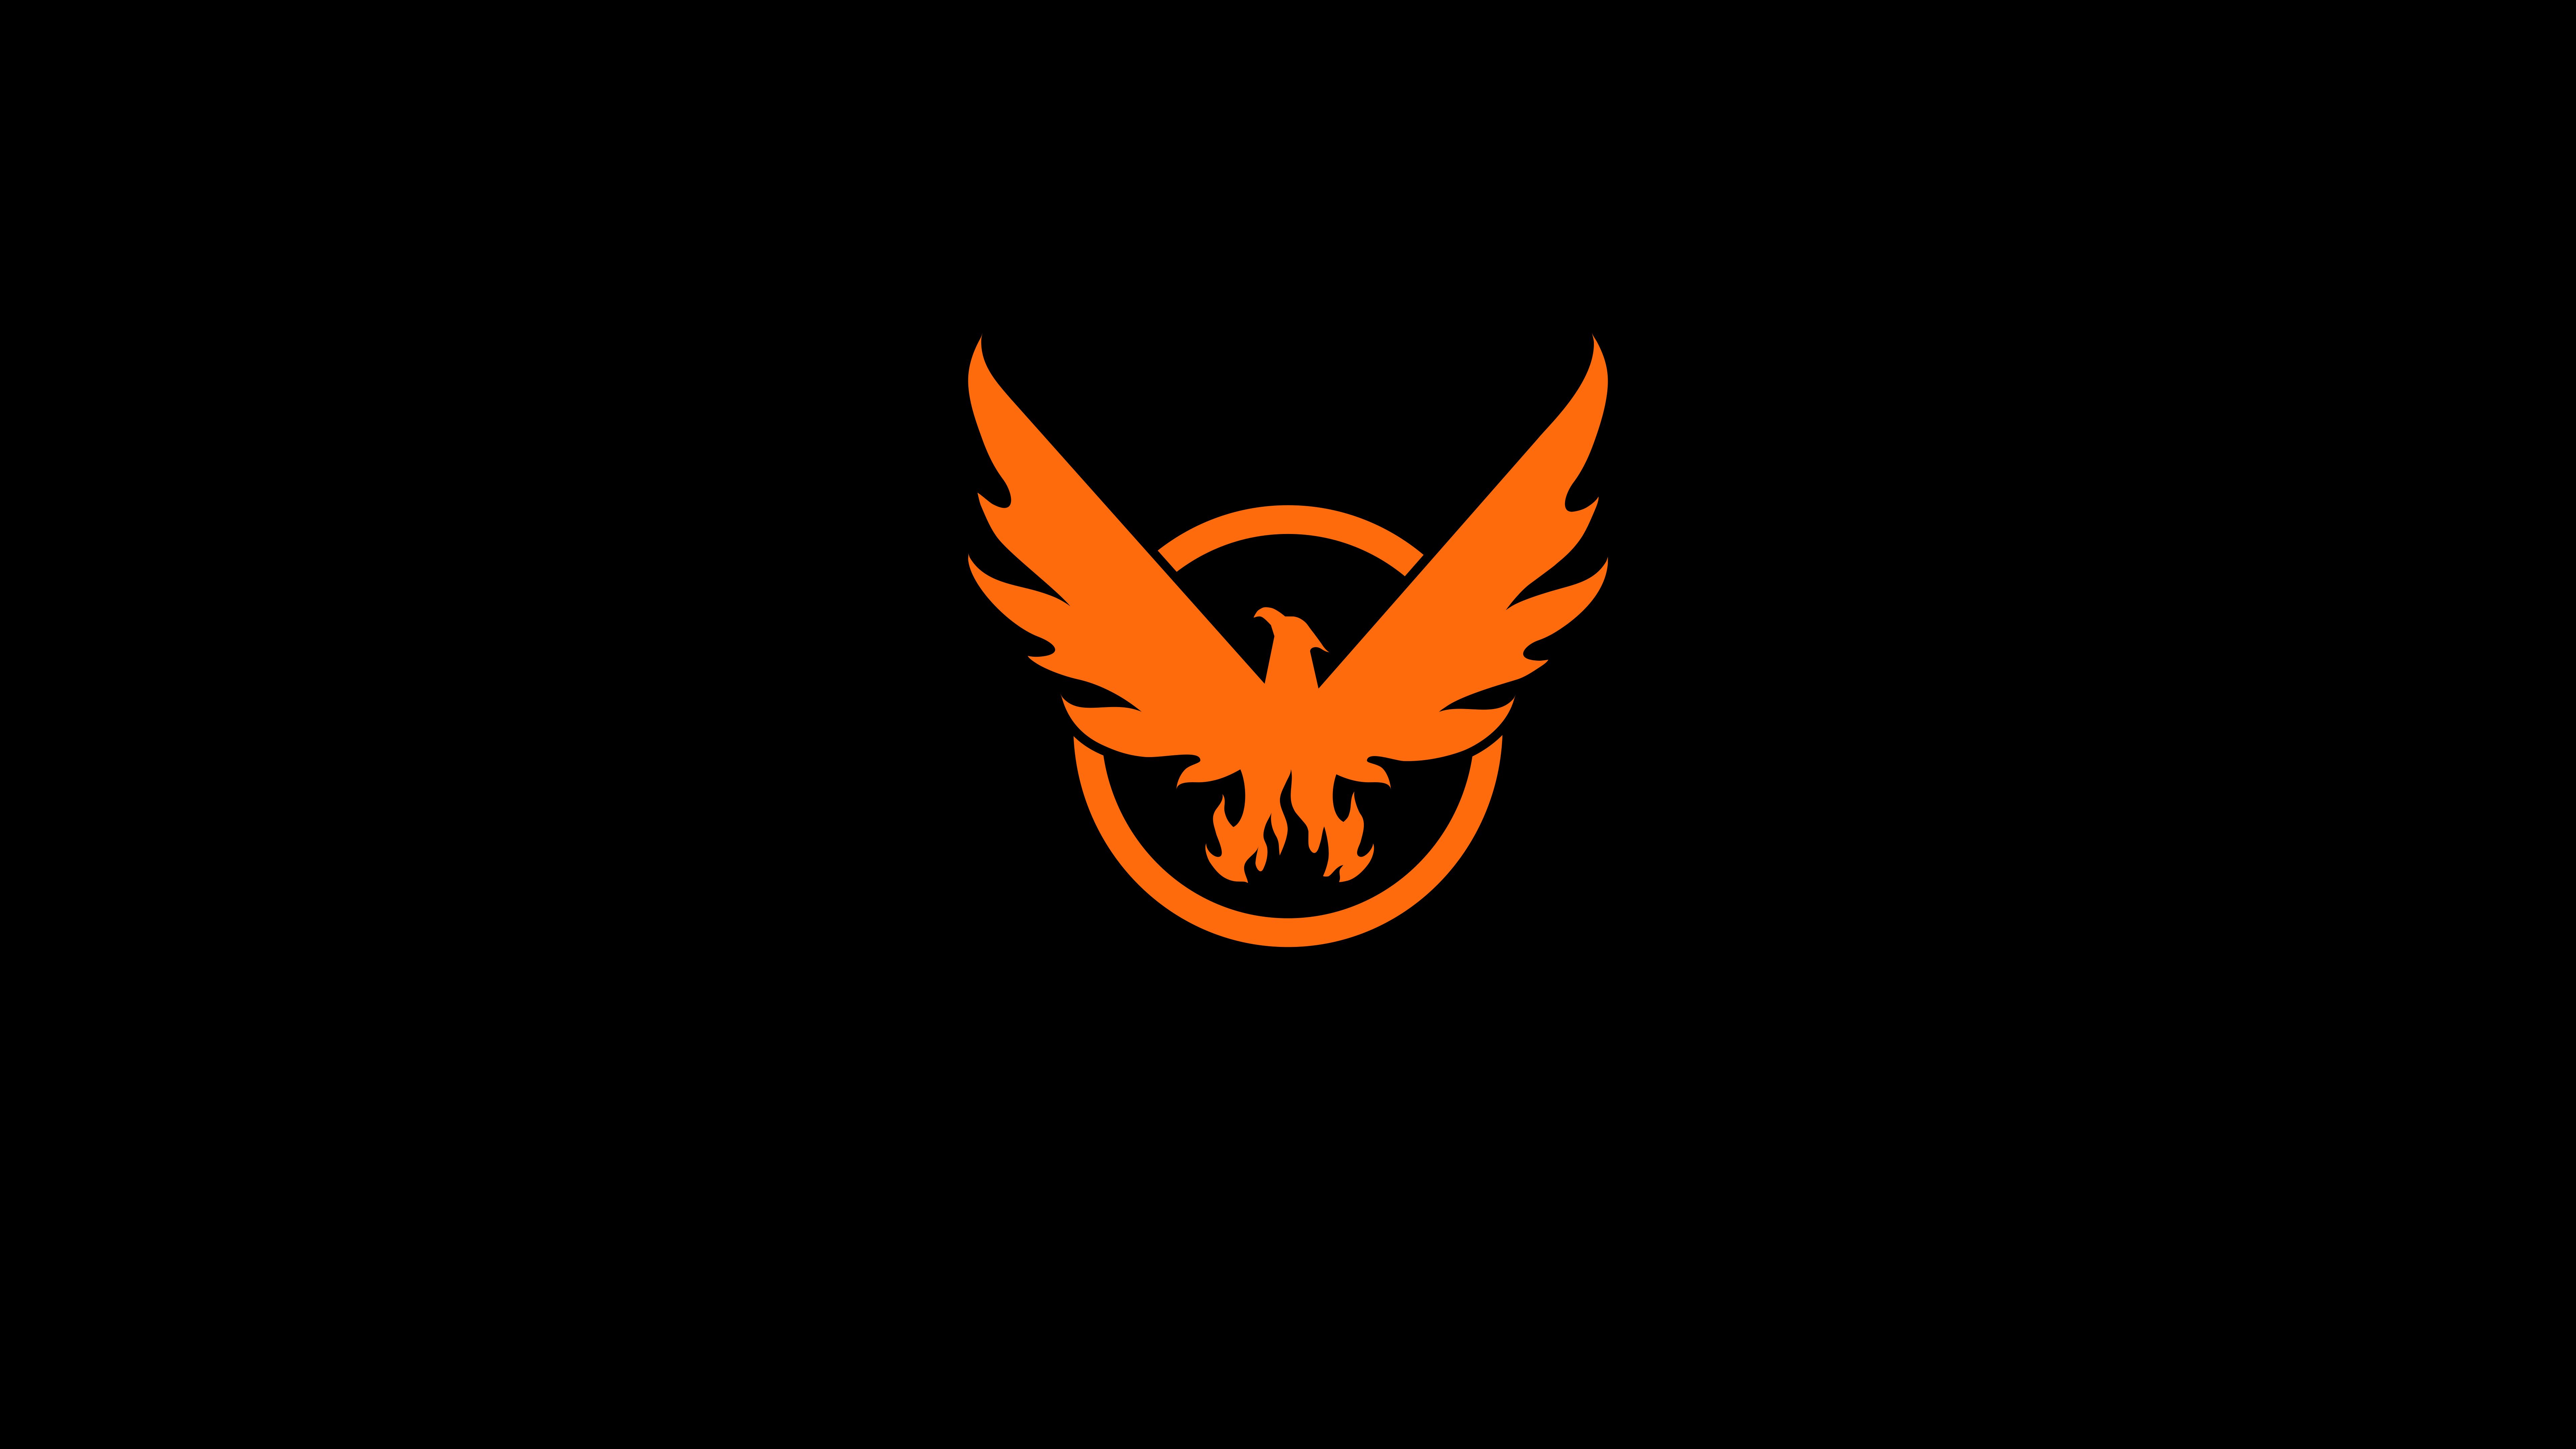 The Division 2 Phoenix Logo 8K Wallpaper